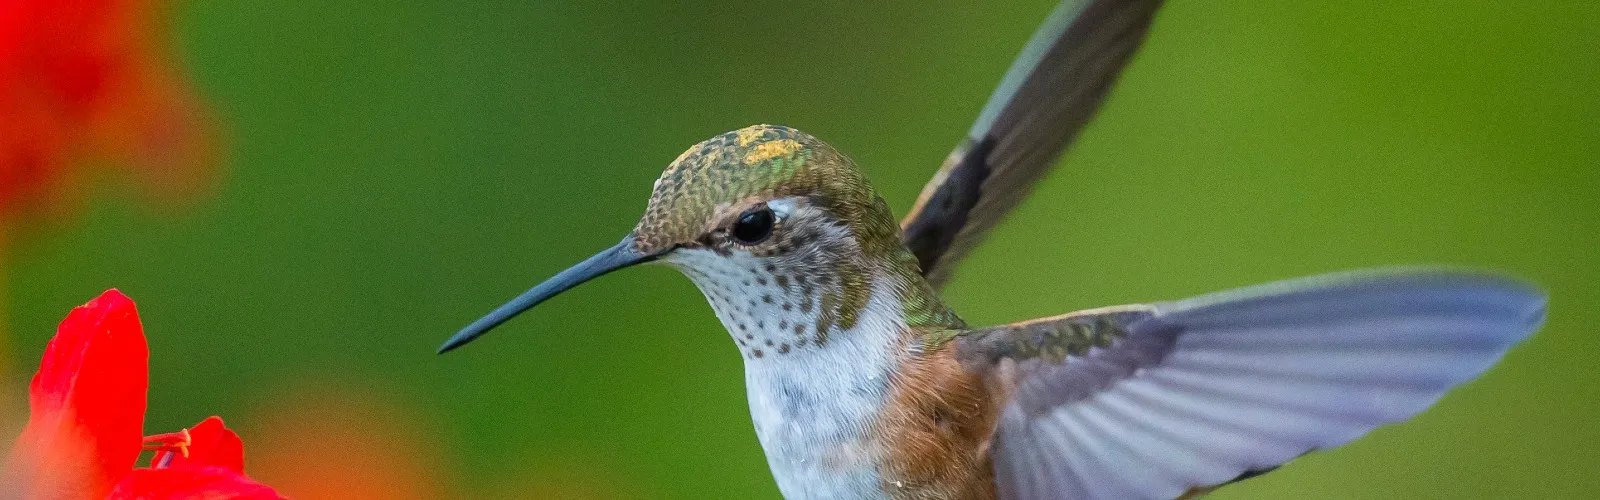 a close up of a hummingbird